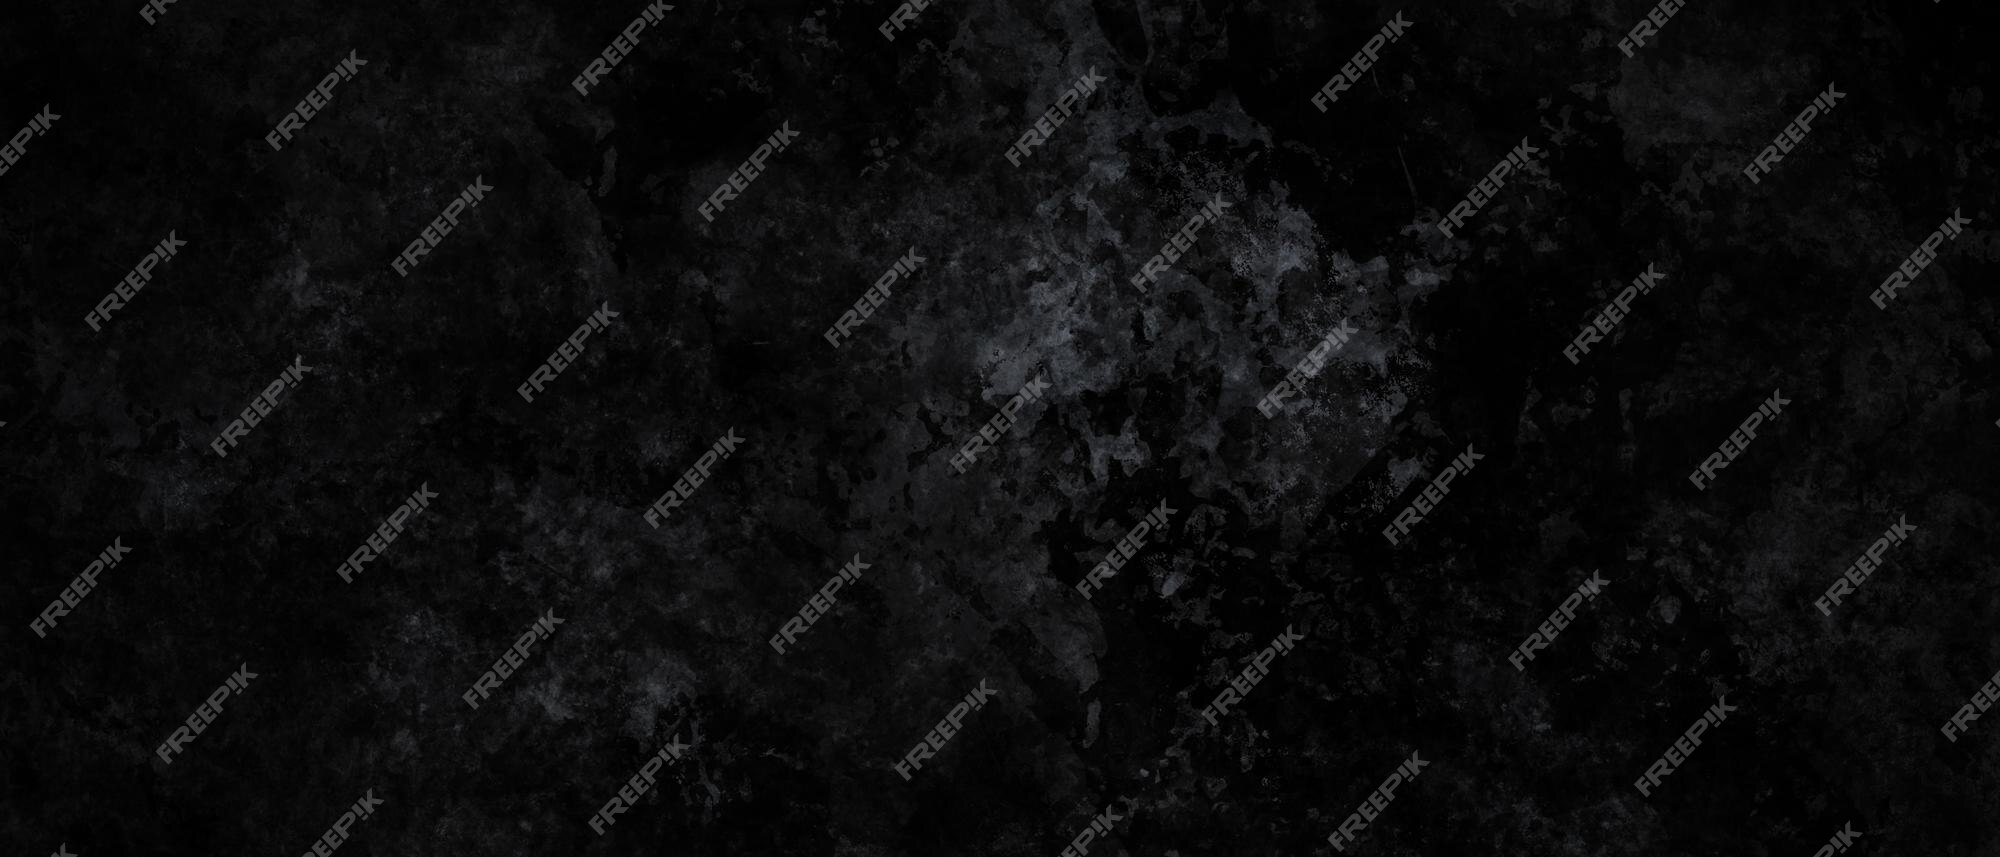 Page 26 | Black Dust Background Images - Free Download on Freepik